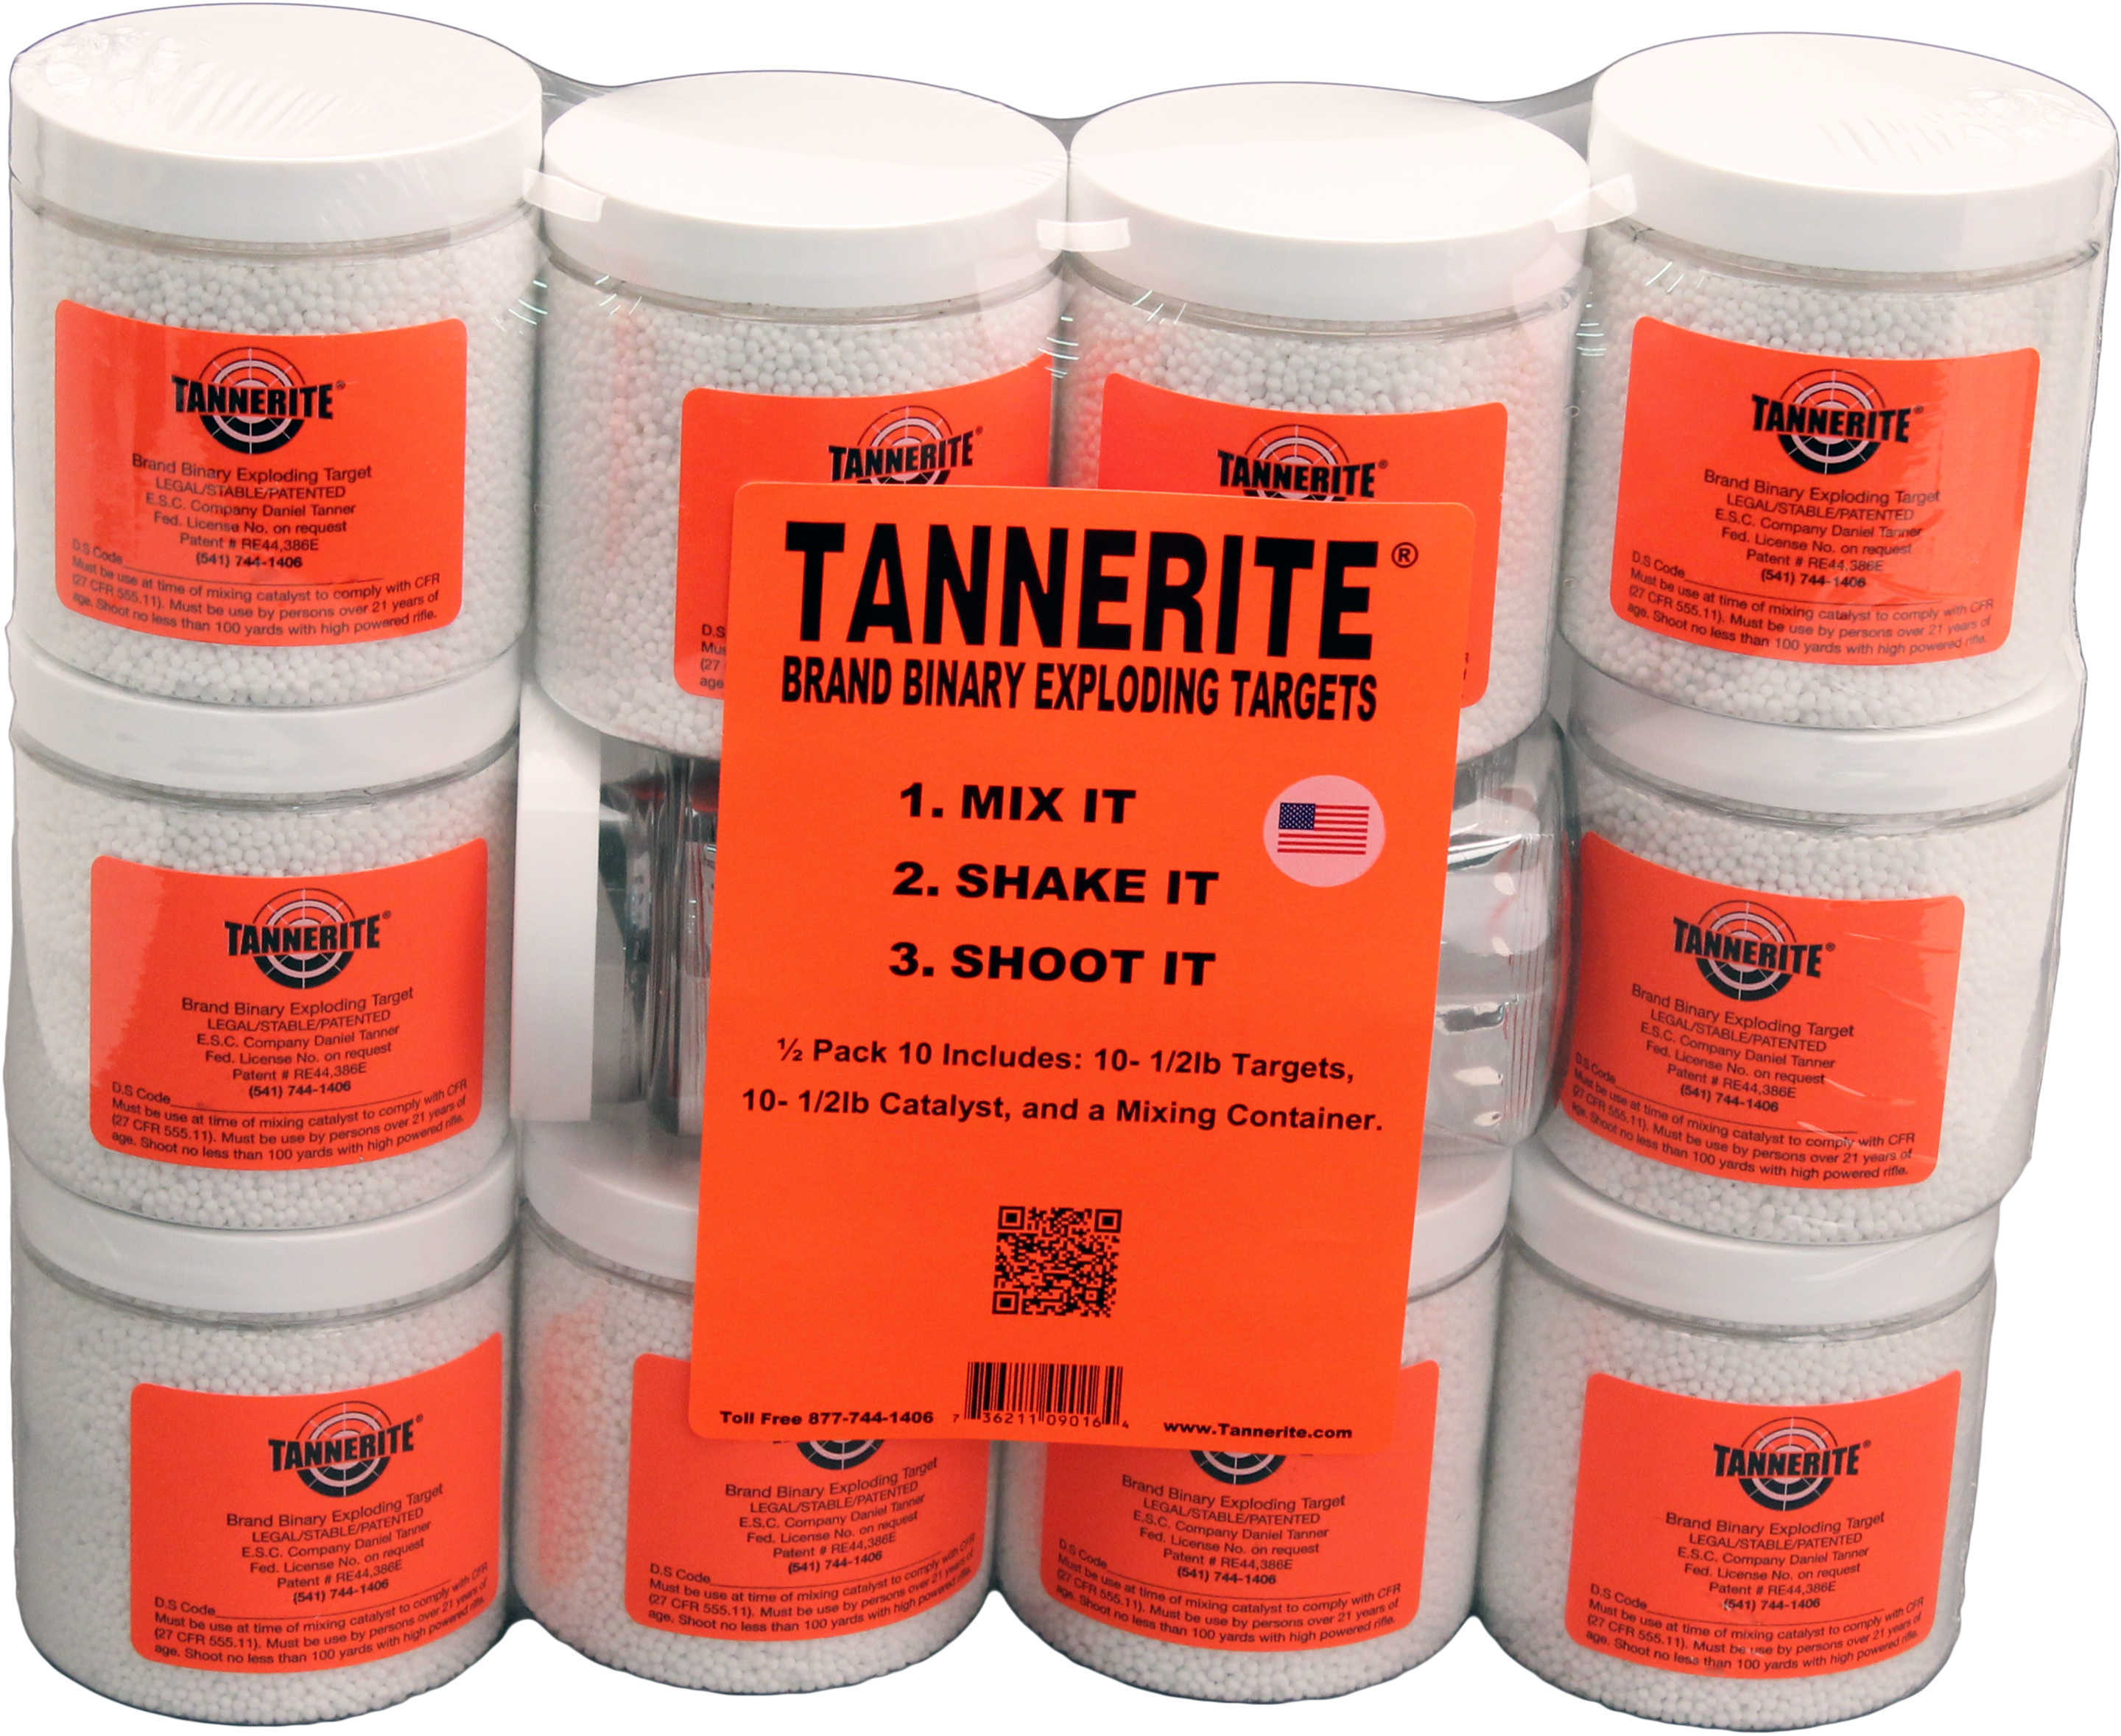 Tannerite 1/2 Pack 10 (10pk of 1/2lb Targets) Md: PK